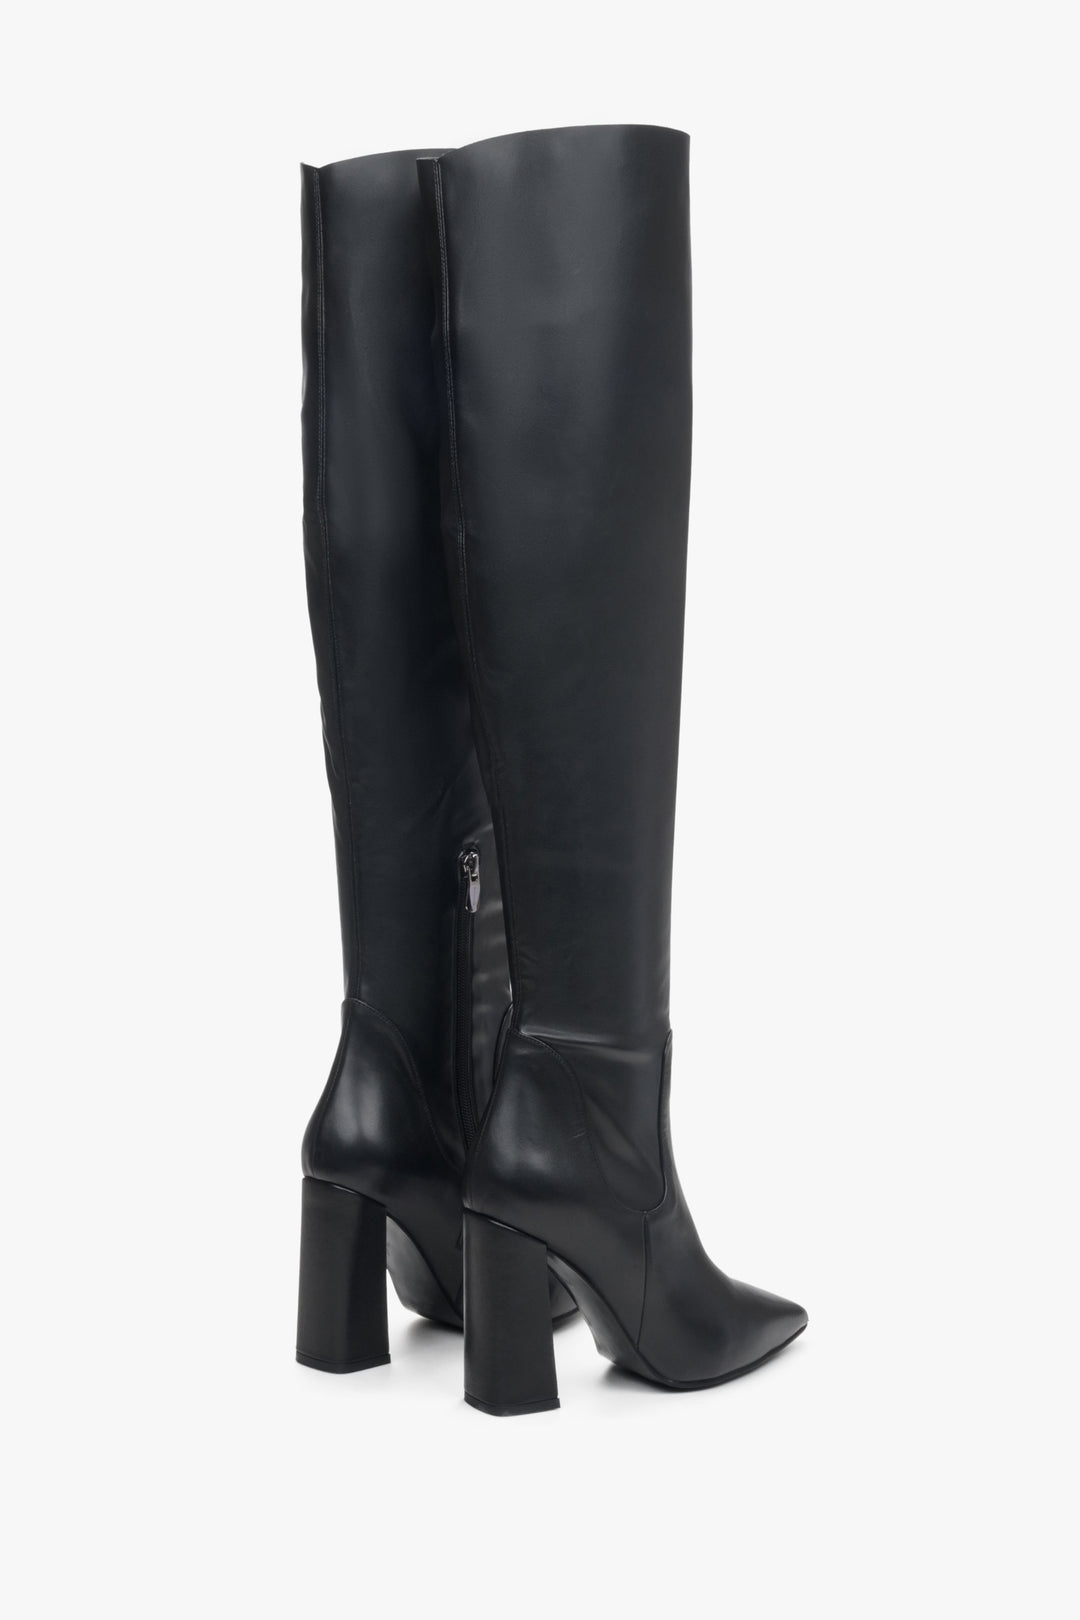 Women's black knee-high boots Estro - presentation on the model in the full shape.